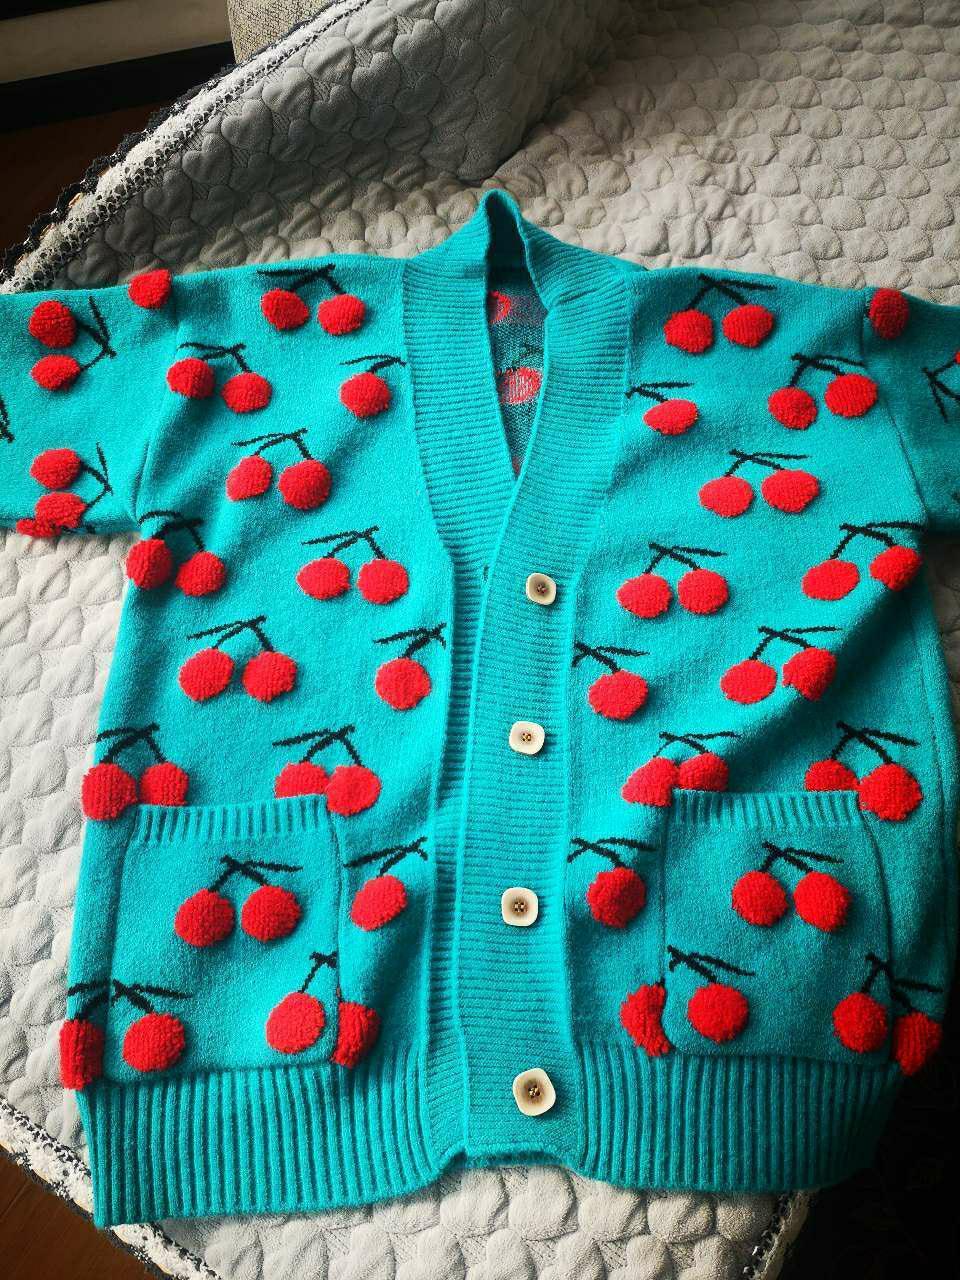 Fruit Cherries Korean Style Knitted Sweater